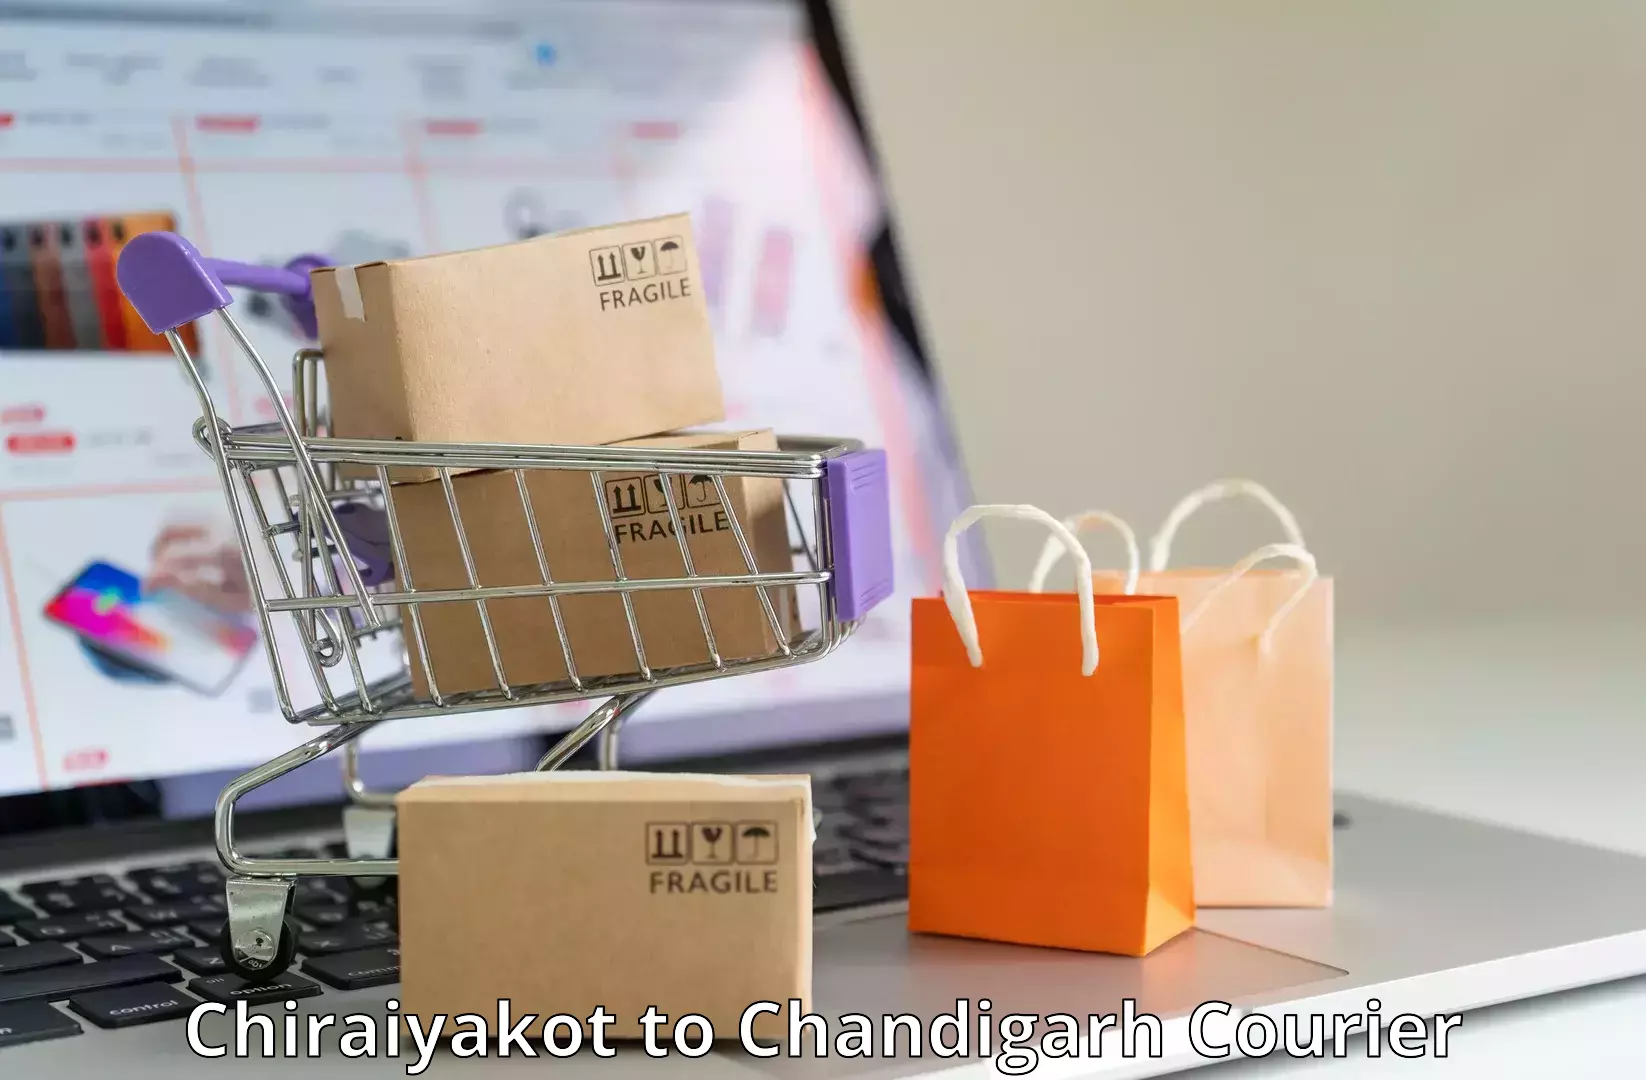 Business delivery service Chiraiyakot to Chandigarh